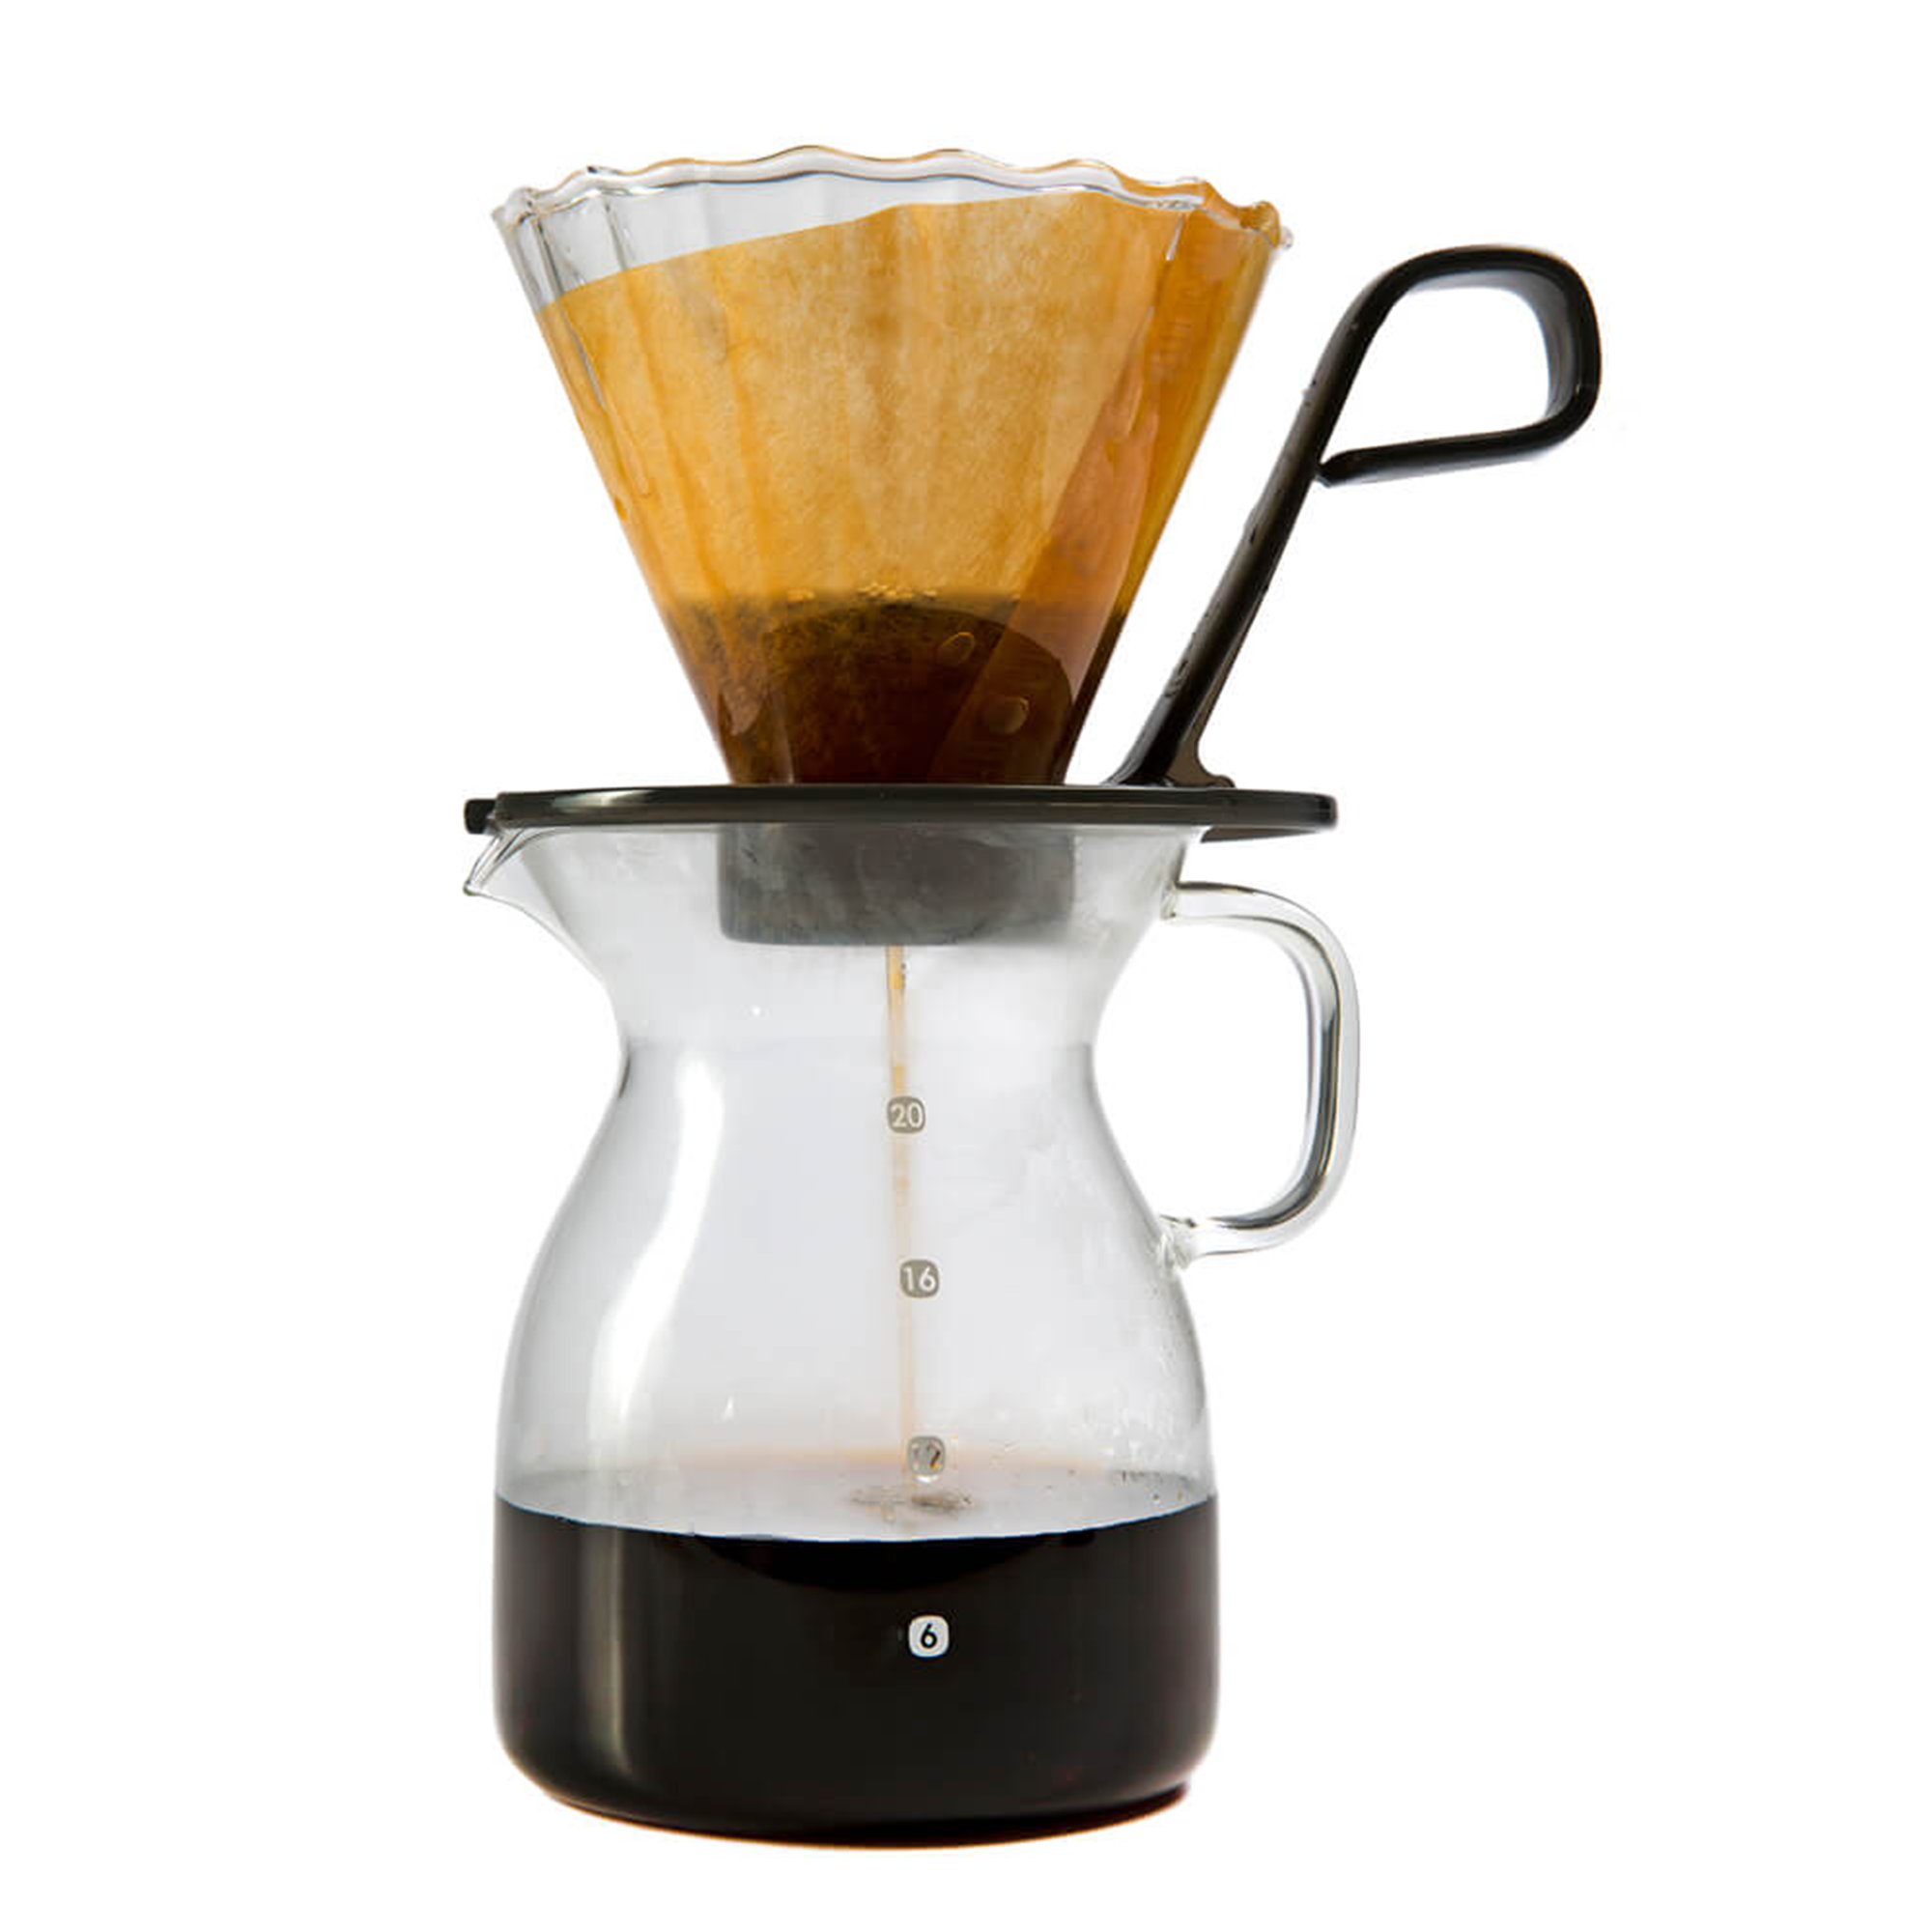 Primula 2 in 1 Craft Coffee Maker